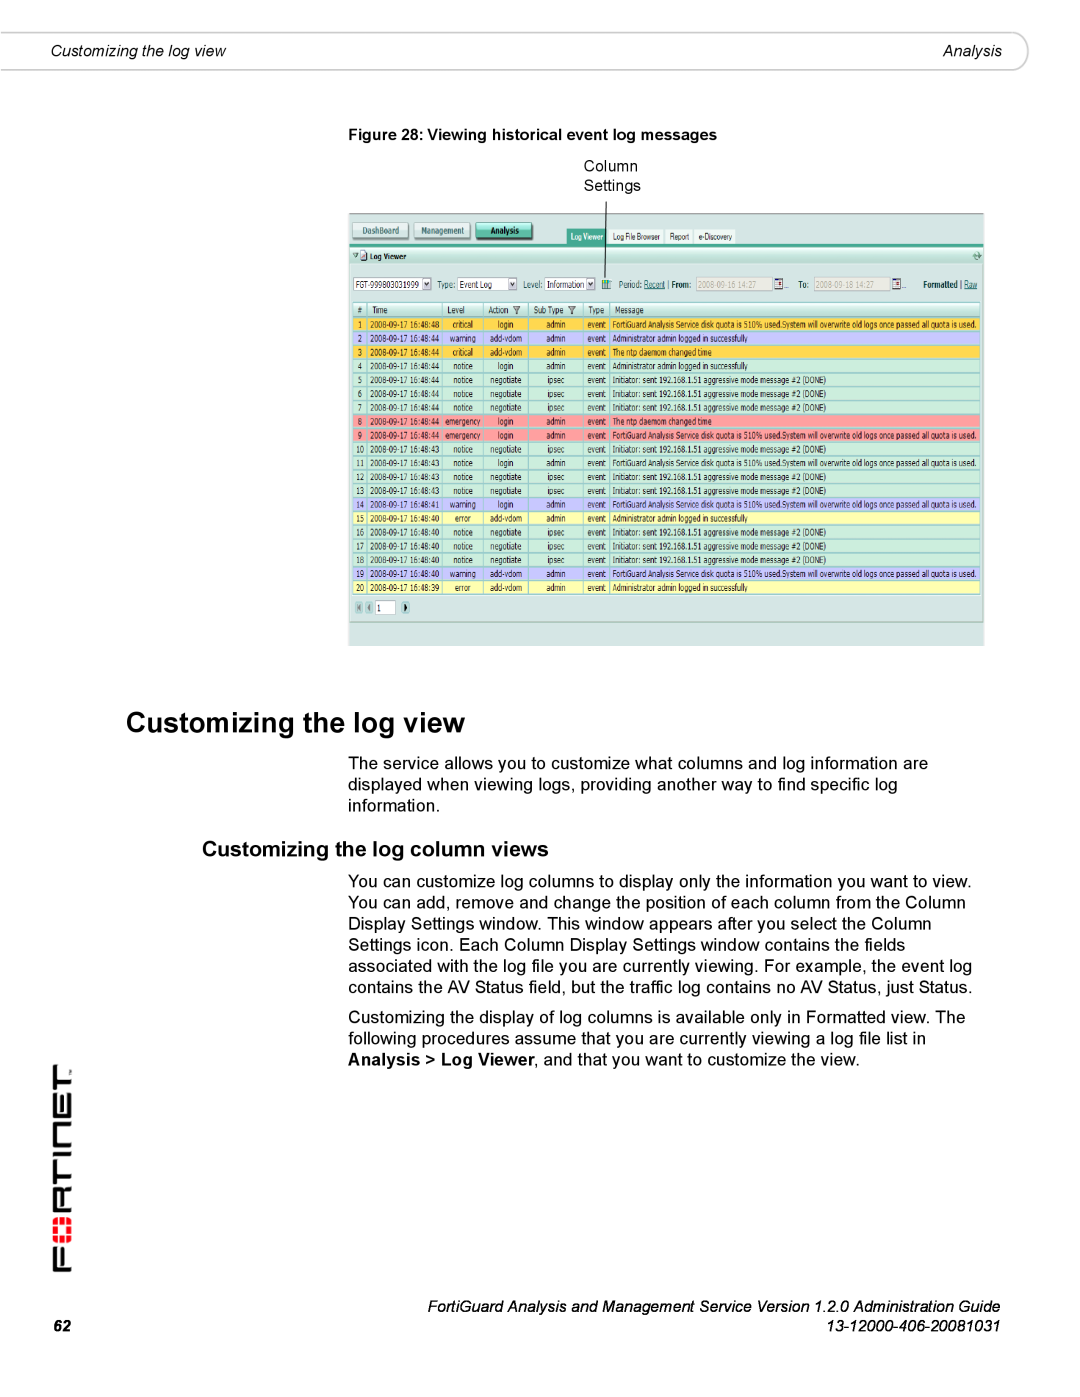 Fortinet 1.2.0 manual Customizing the log view, Customizing the log column views 